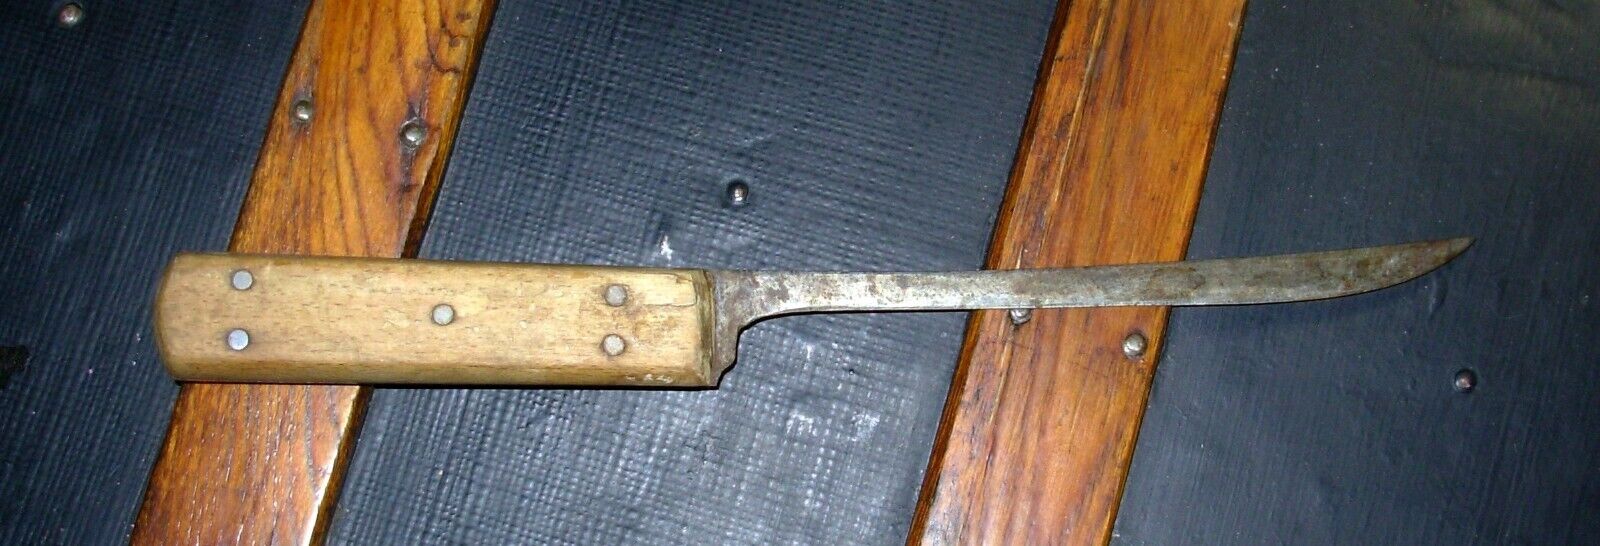 Antique Heavily Used Handmade Butcher Trade Knife-No Sheath